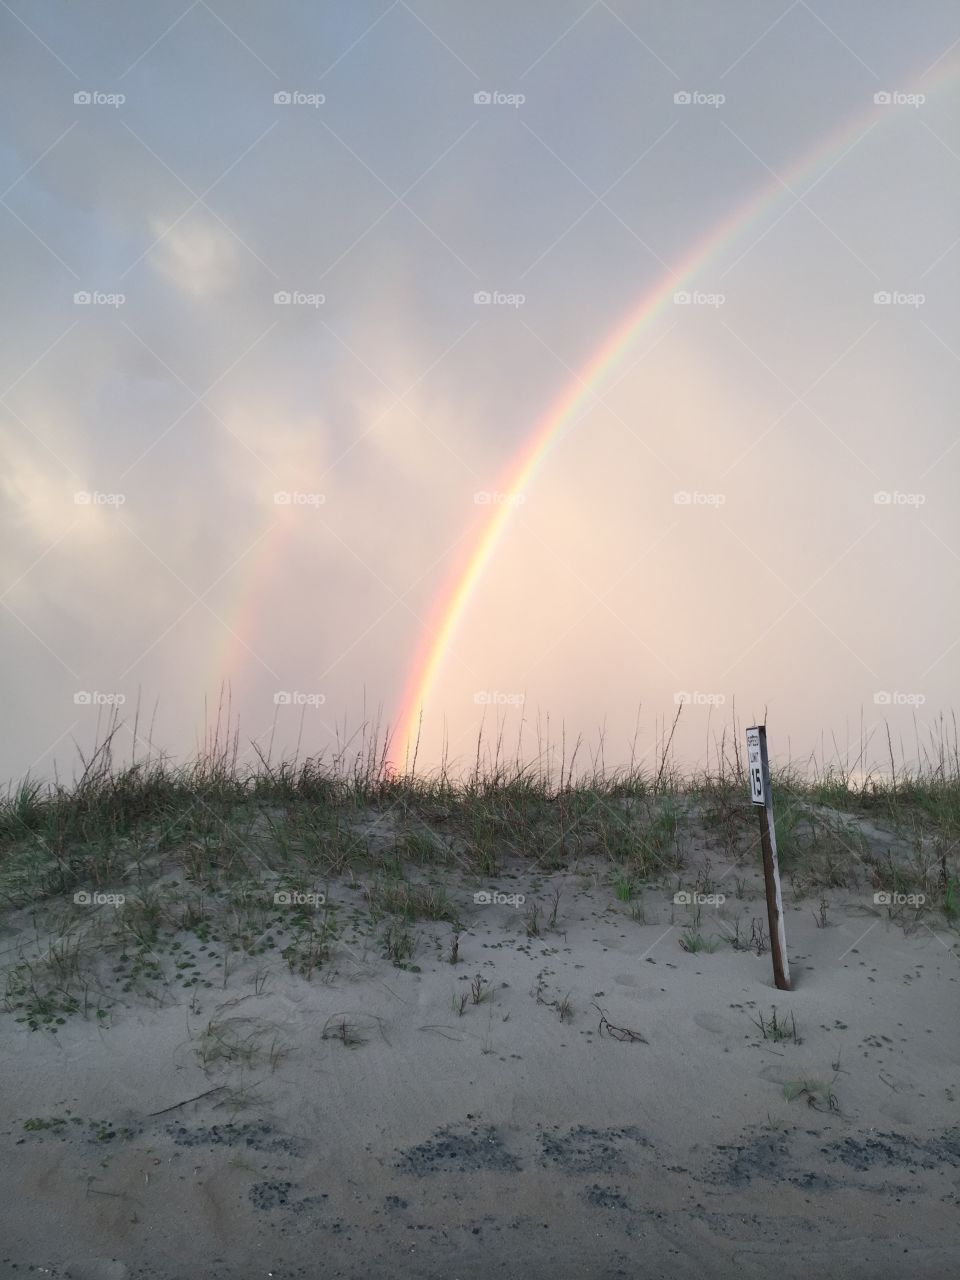 Double rainbow @ Ocracoke